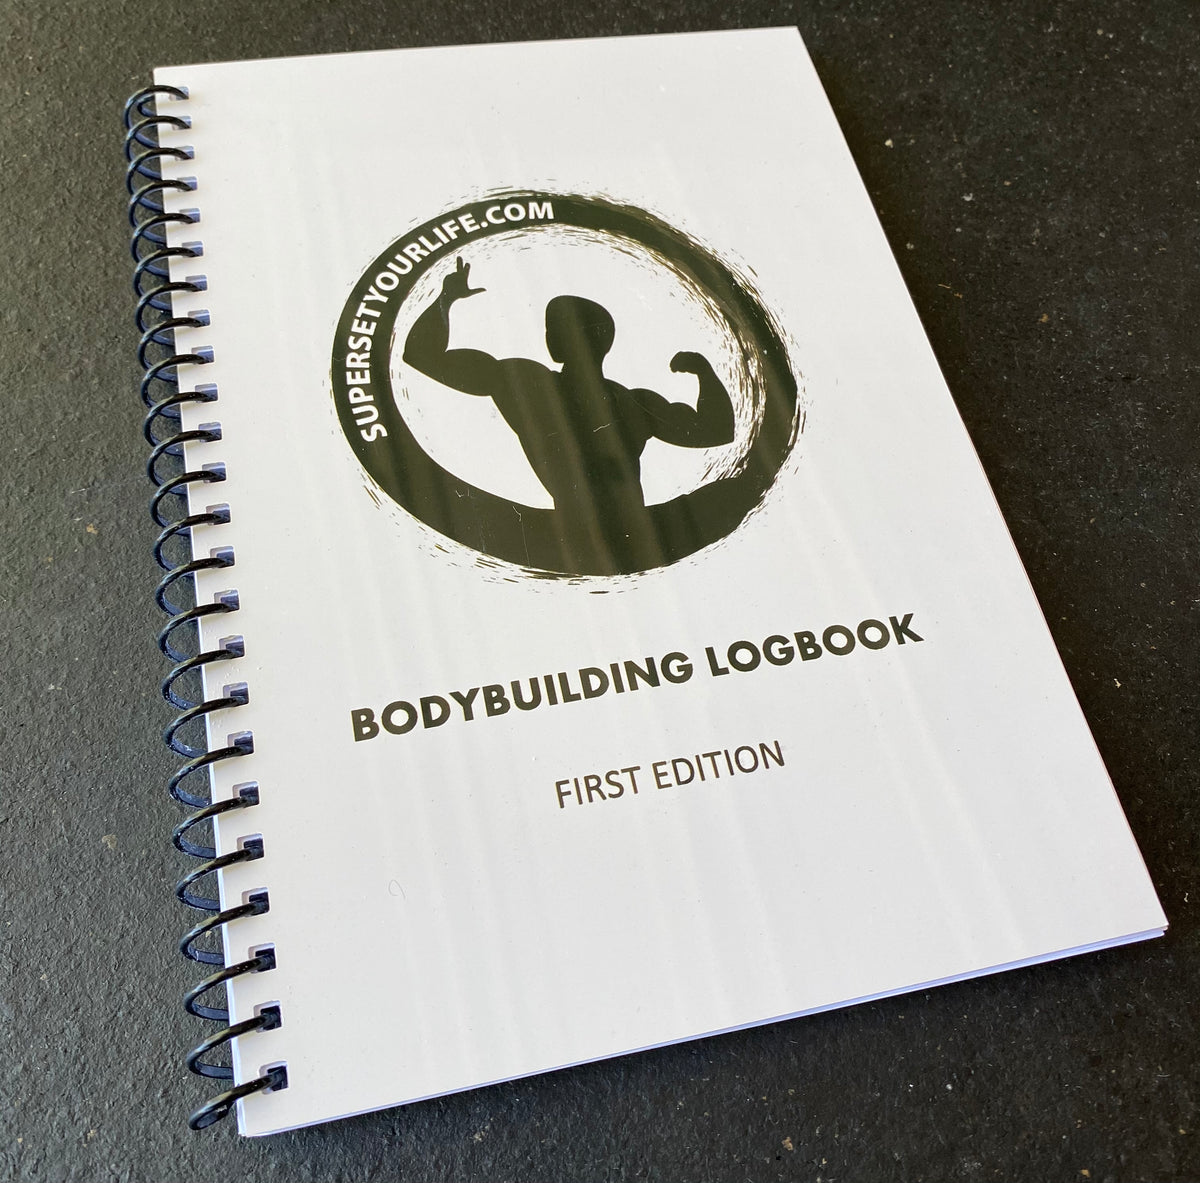 Bodybuilding Logbook | 1st Edition – supersetyourlife